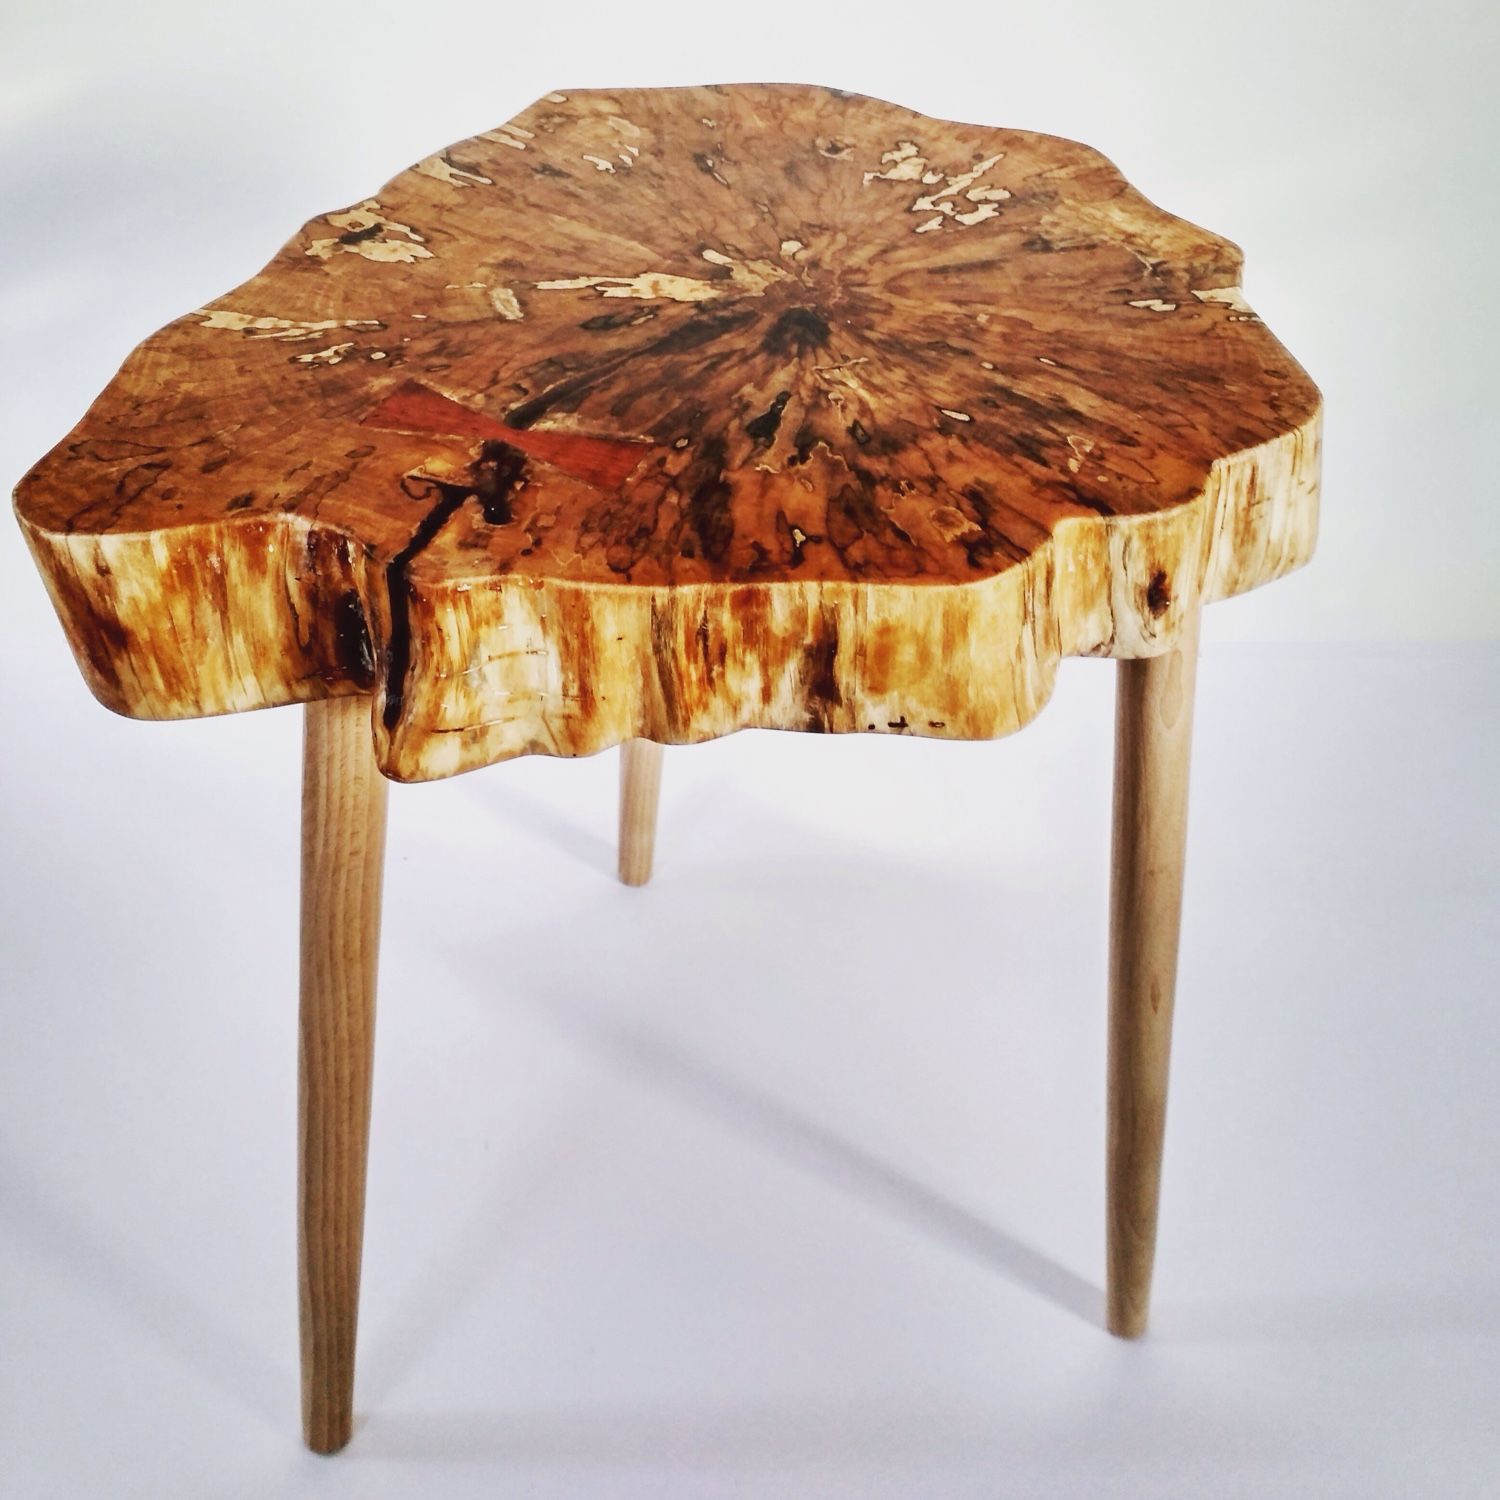 деревянный стол из березы